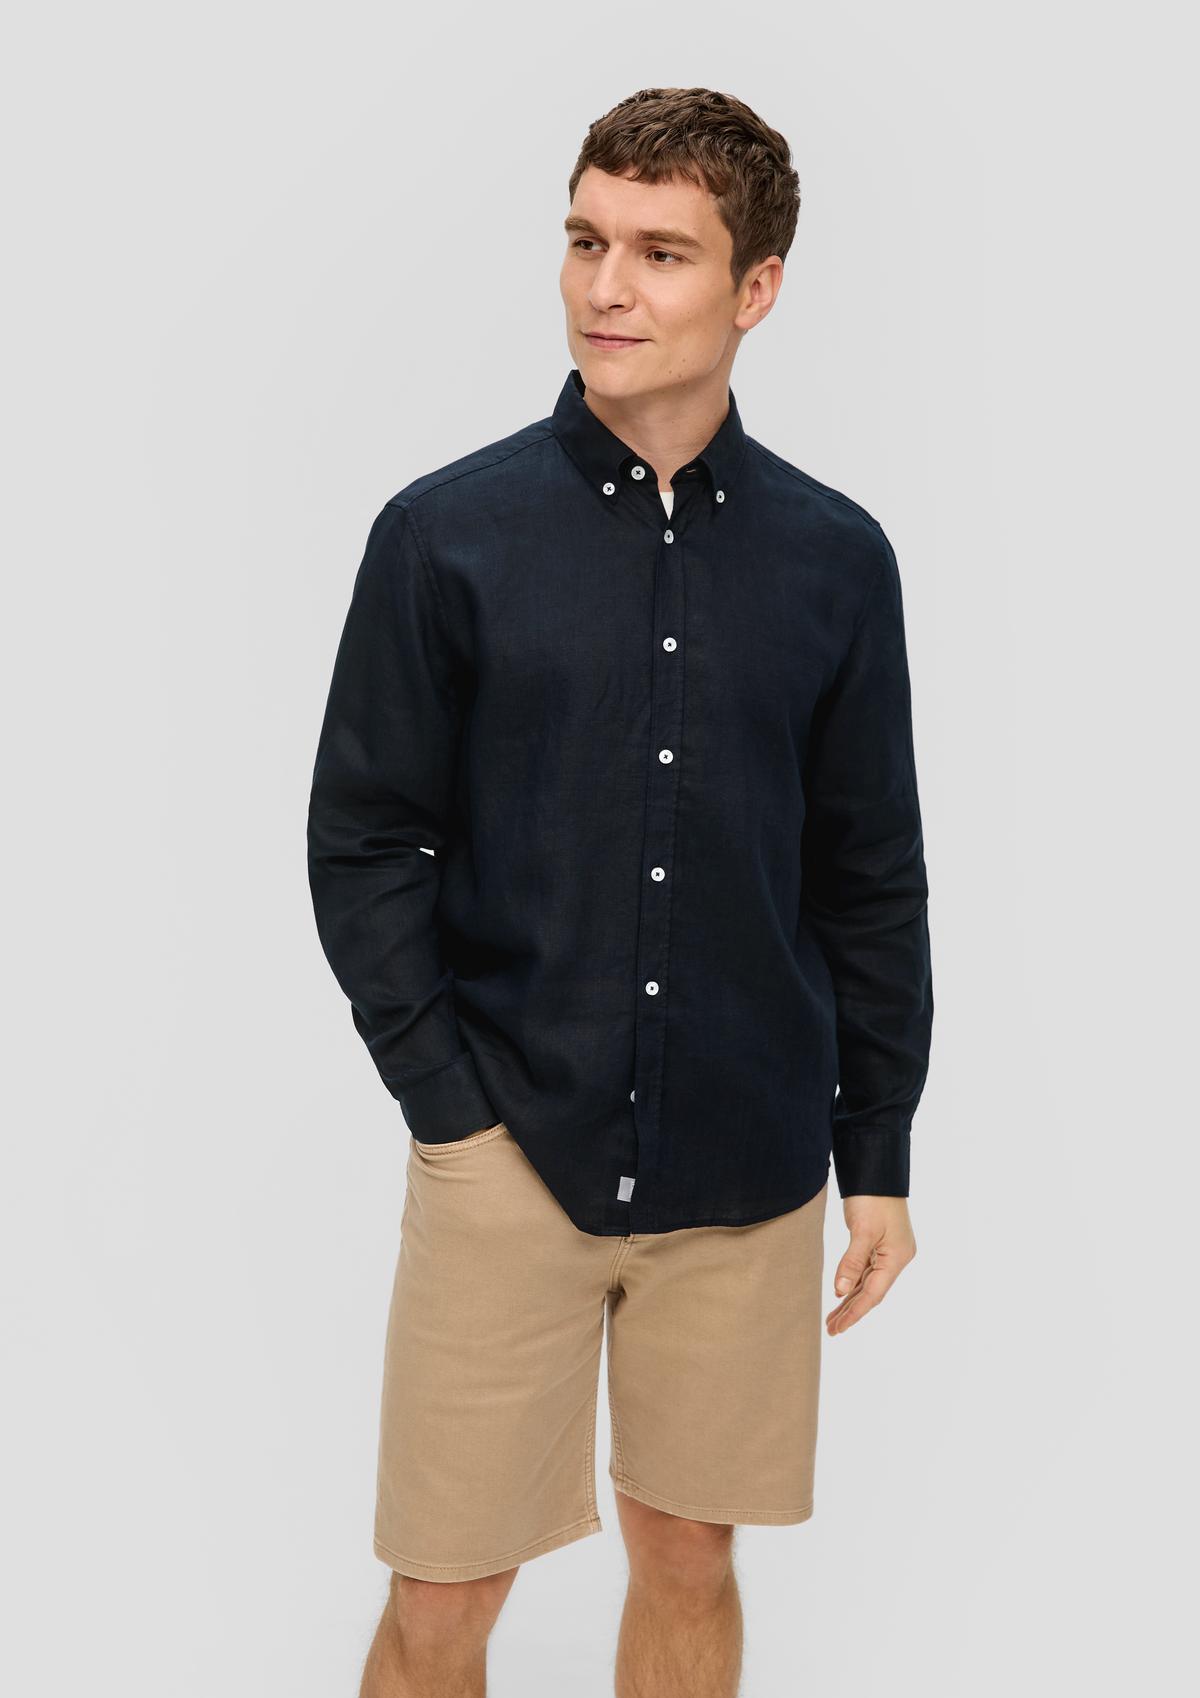 Linen shirt with a button-down collar